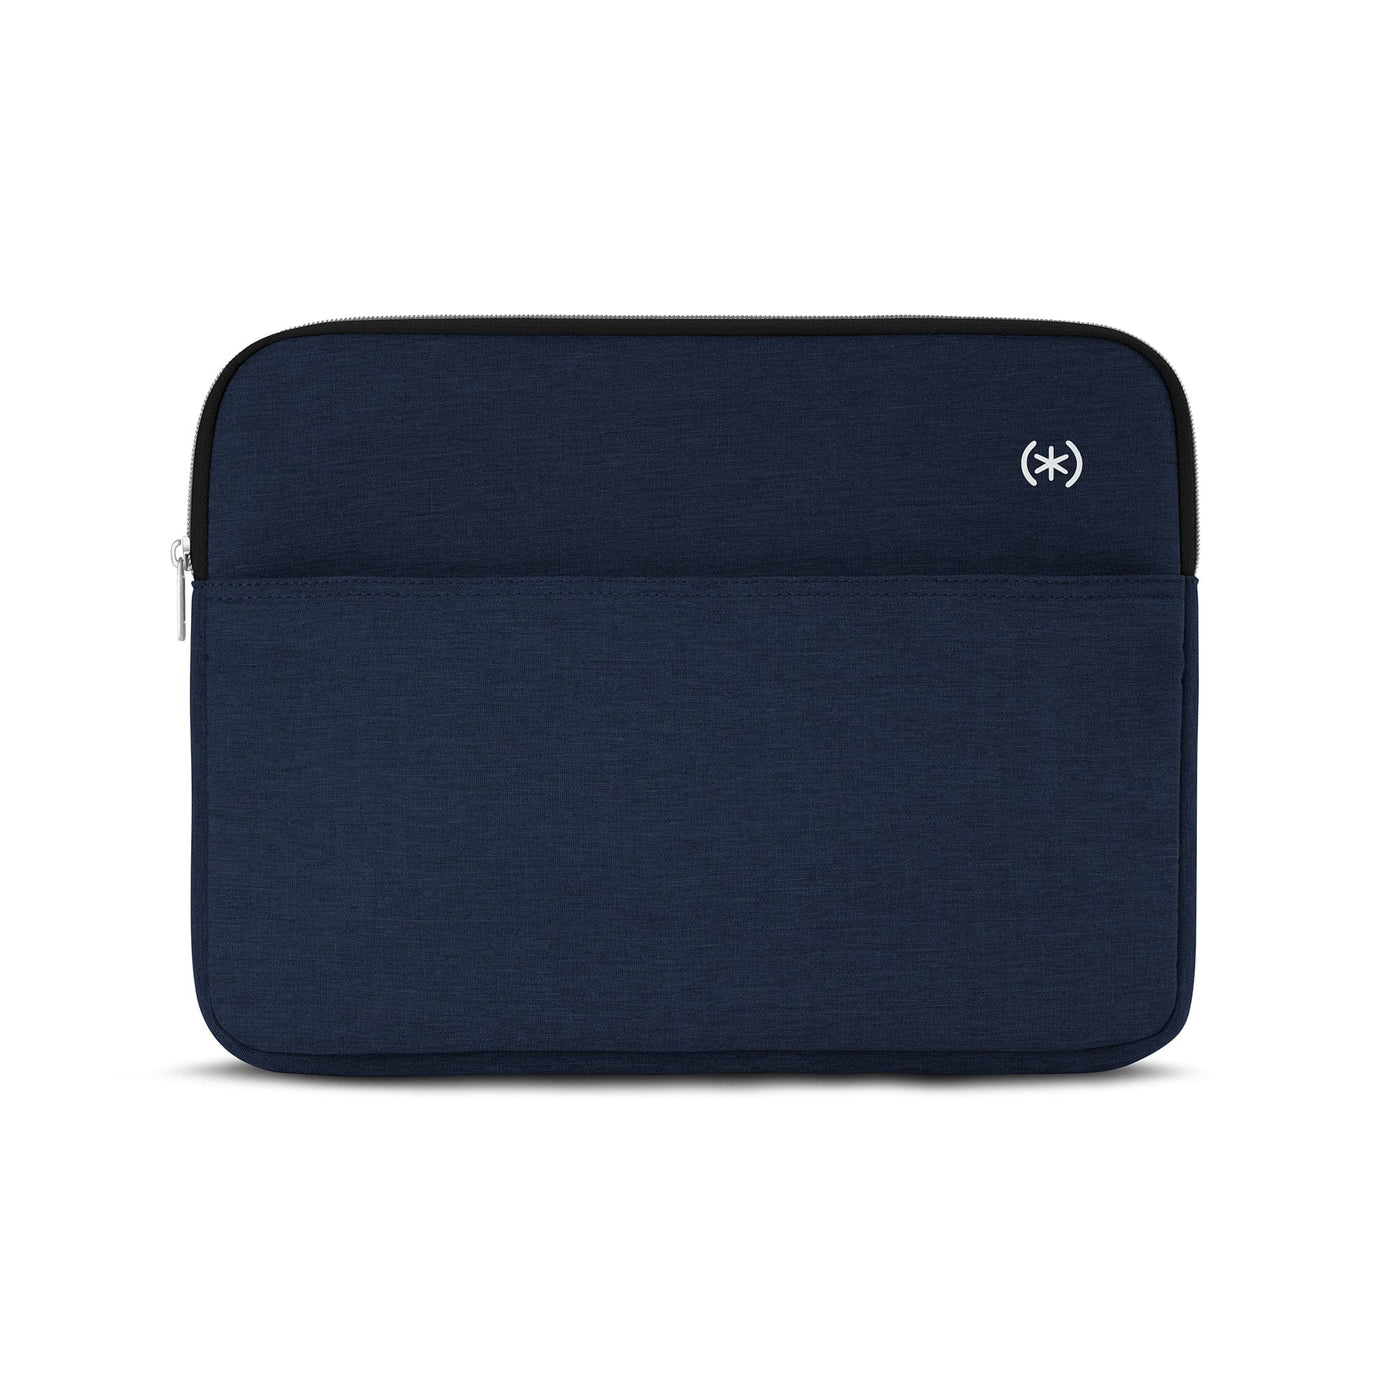 Speck - Transfer Pro Pocket Sleeve for 16 Laptop - City Gray/Rose Gold Pink